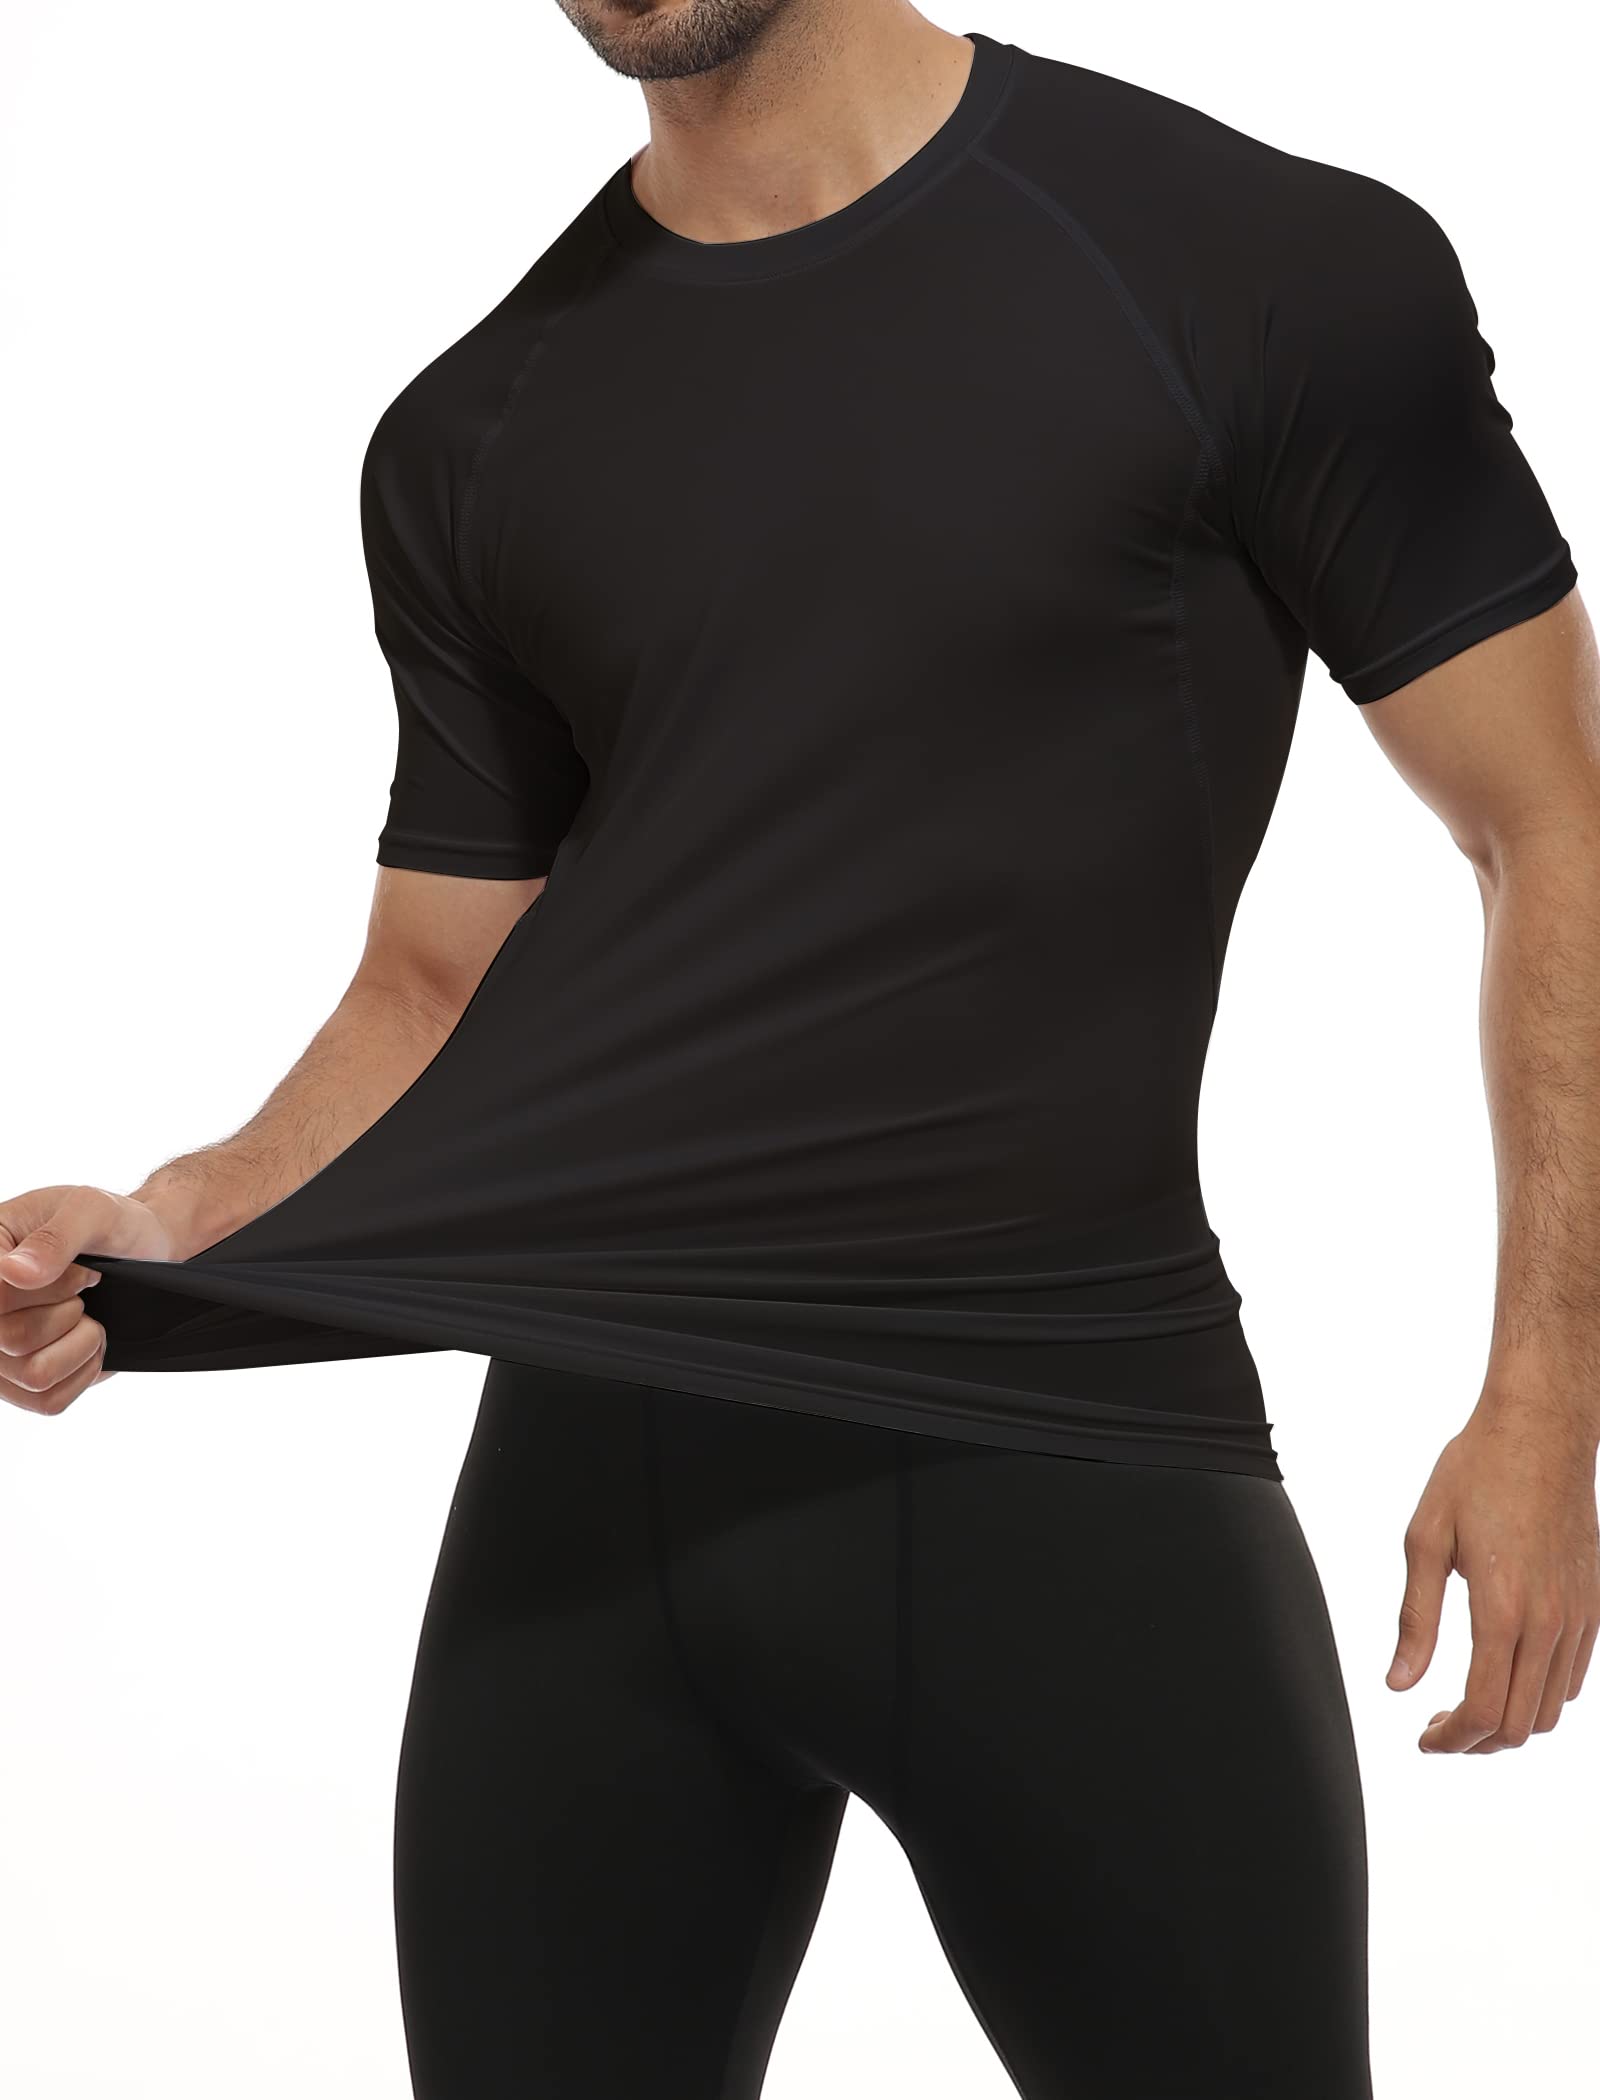  TELALEO 5 Pack Men's Athletic Compression Shirts